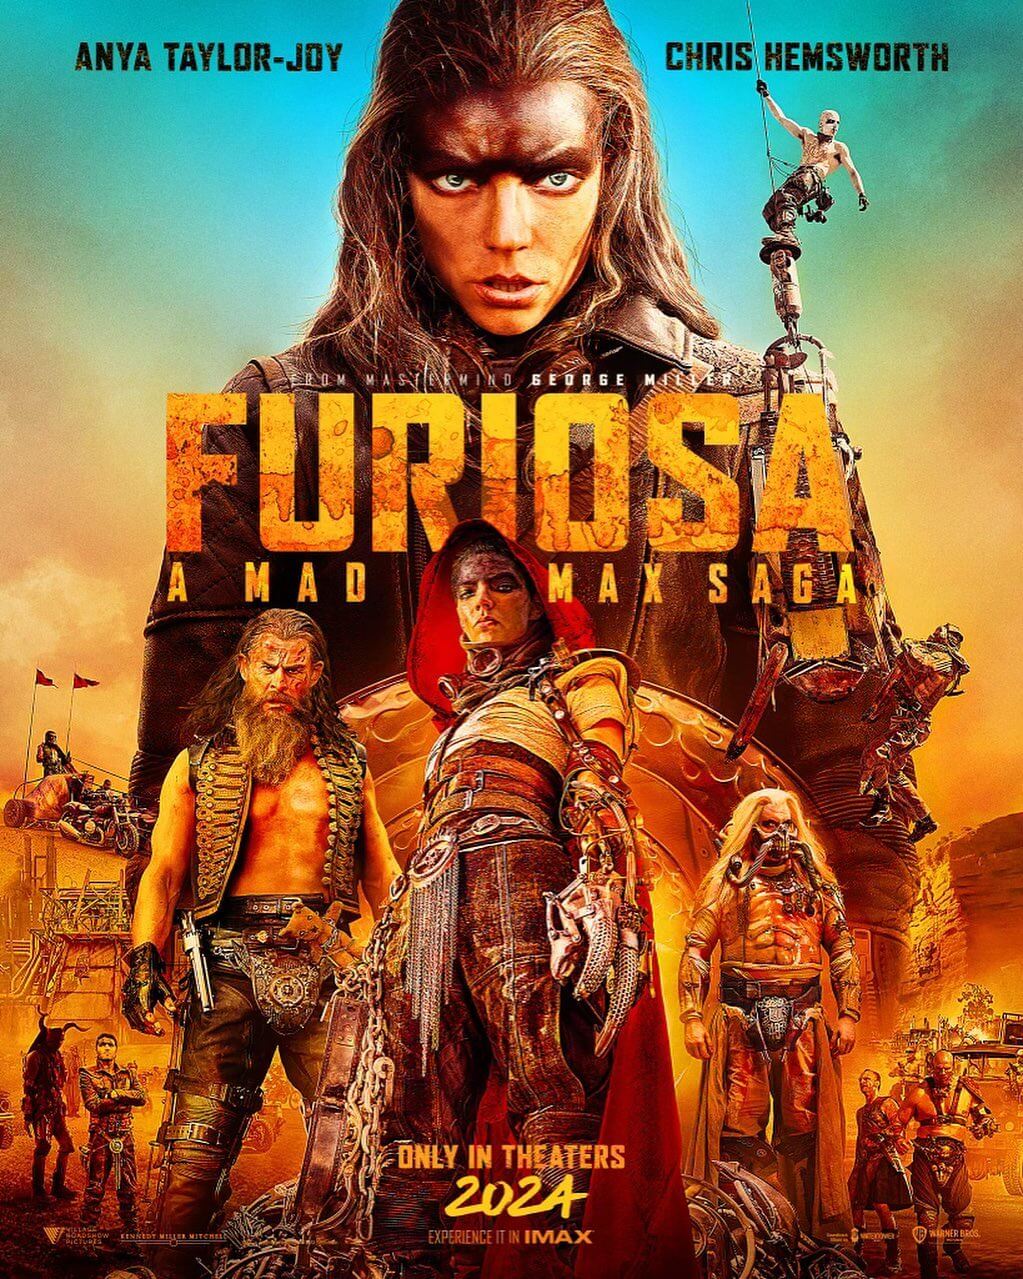 Furiosa A Mad Max Saga Movie (2024) Cast & Crew, Release Date, Story